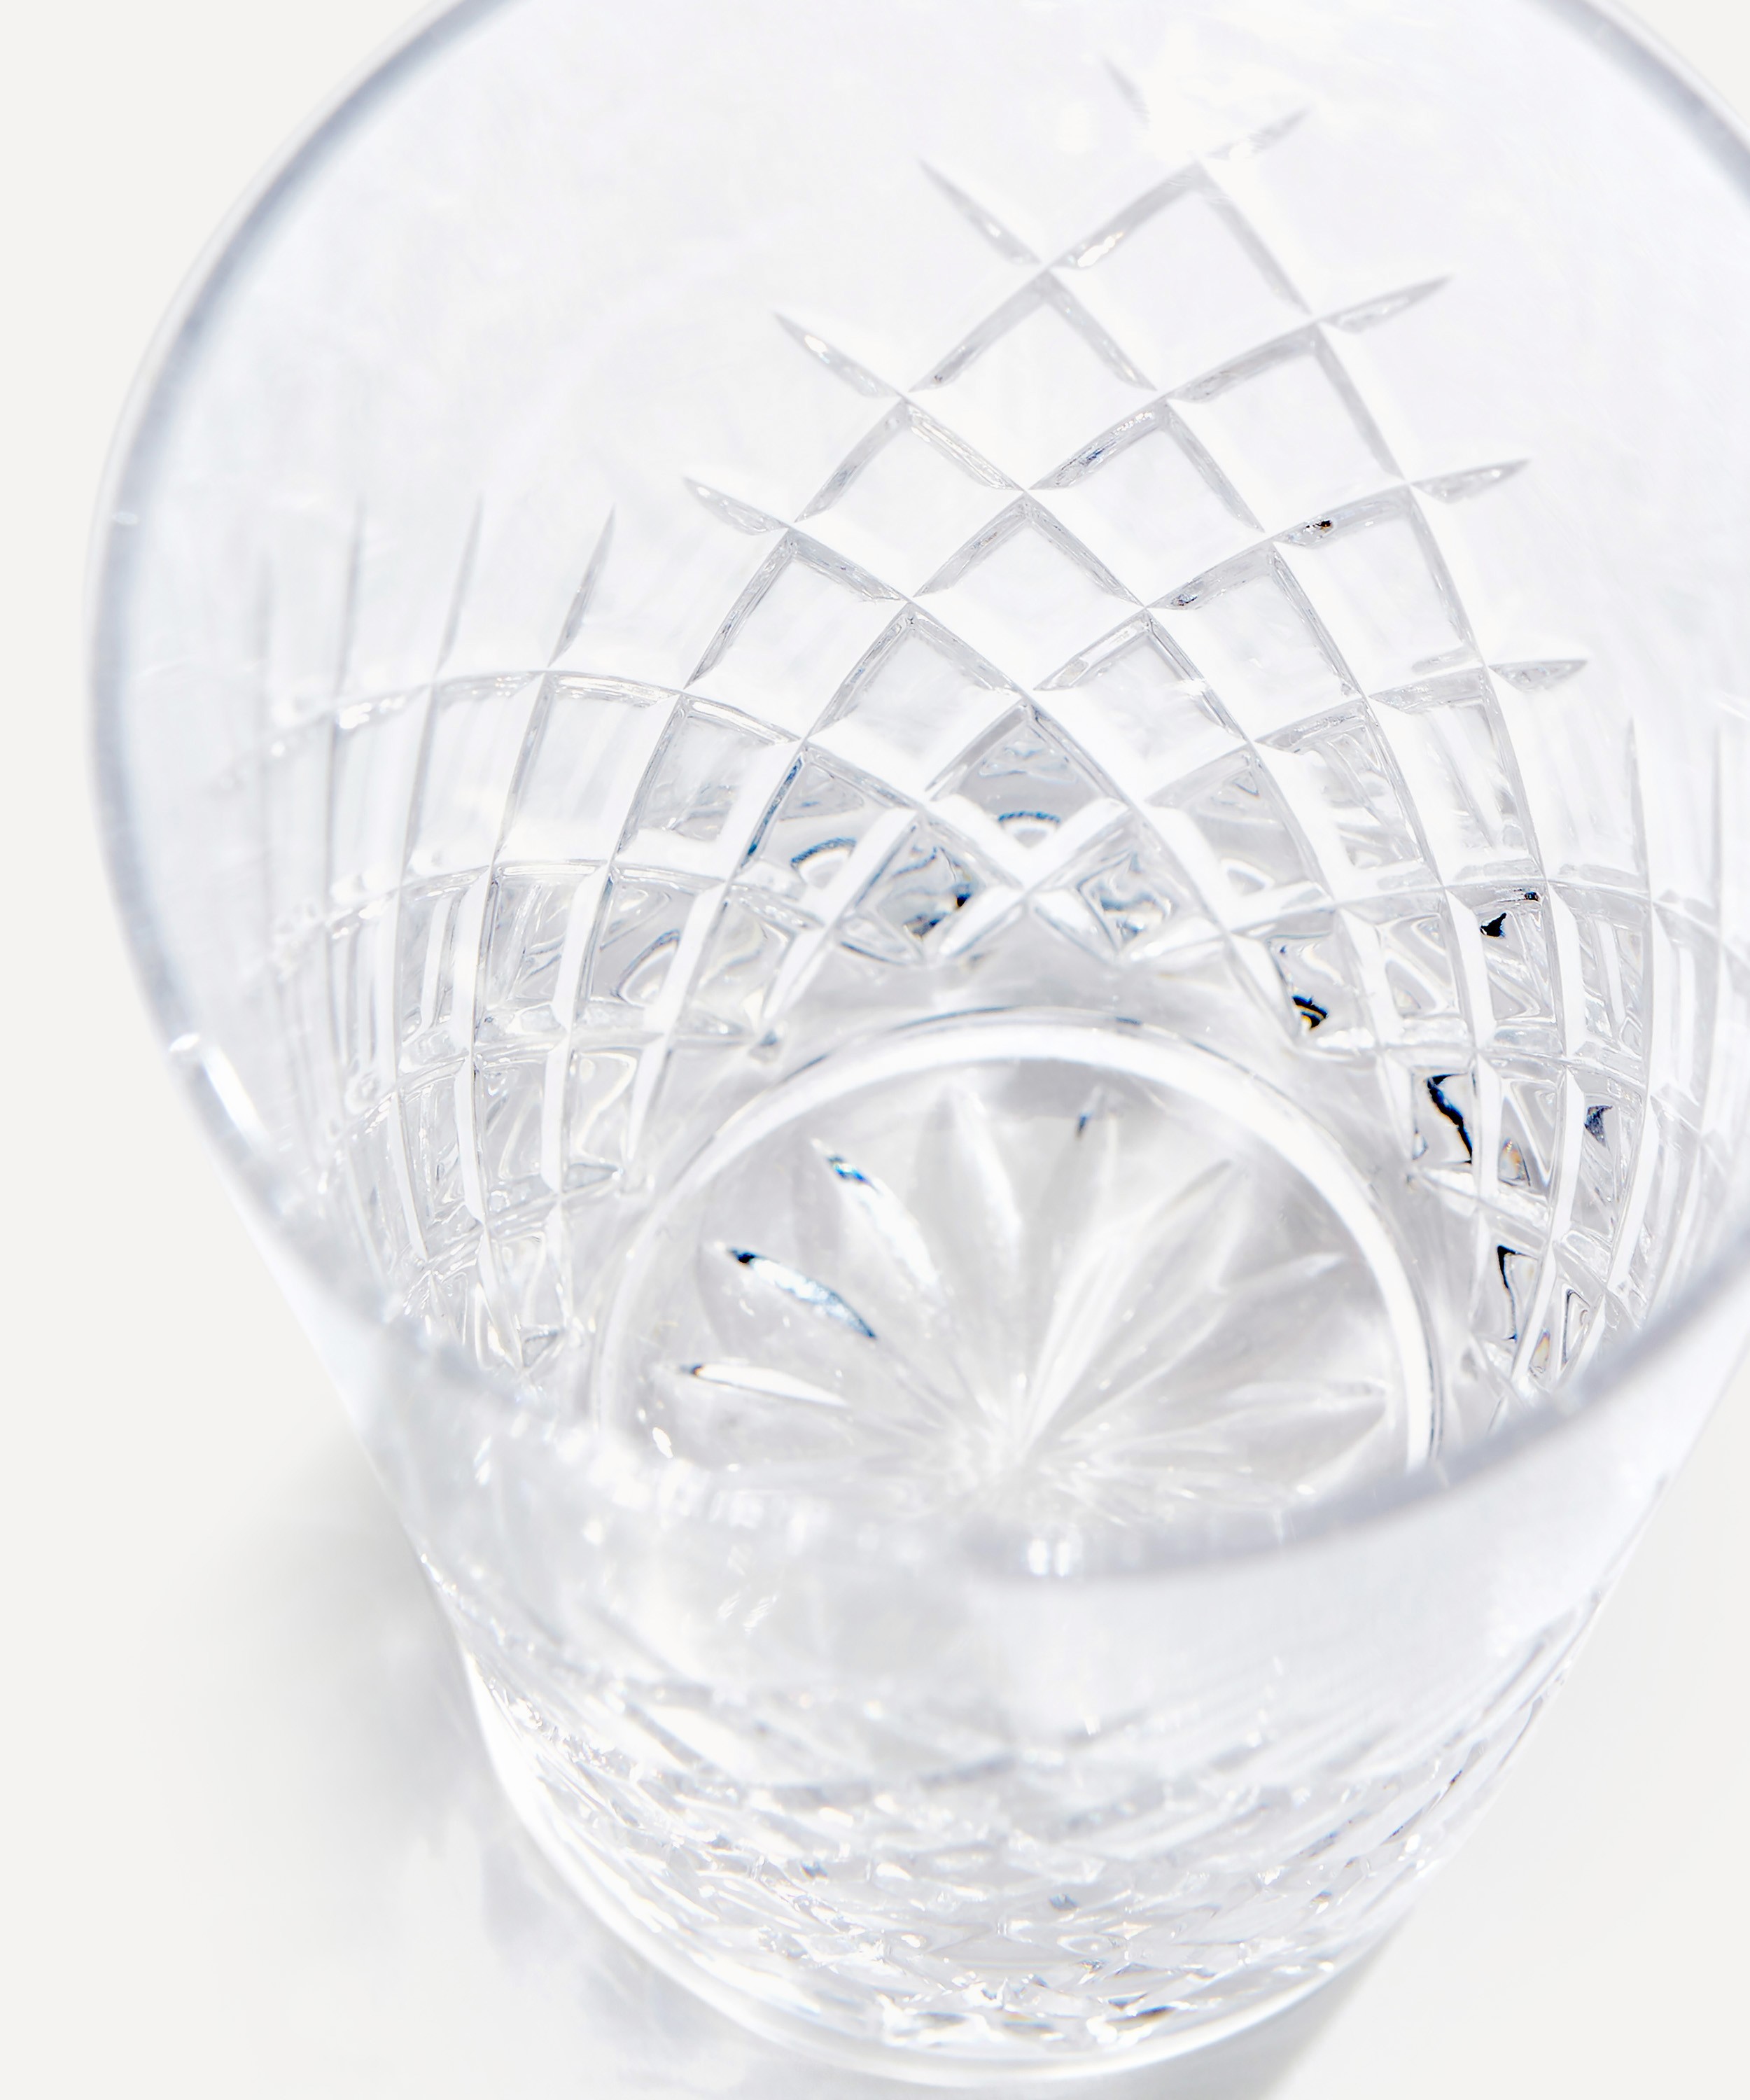 Soho Home Barwell Cut Crystal Highball Glass | Set of 4